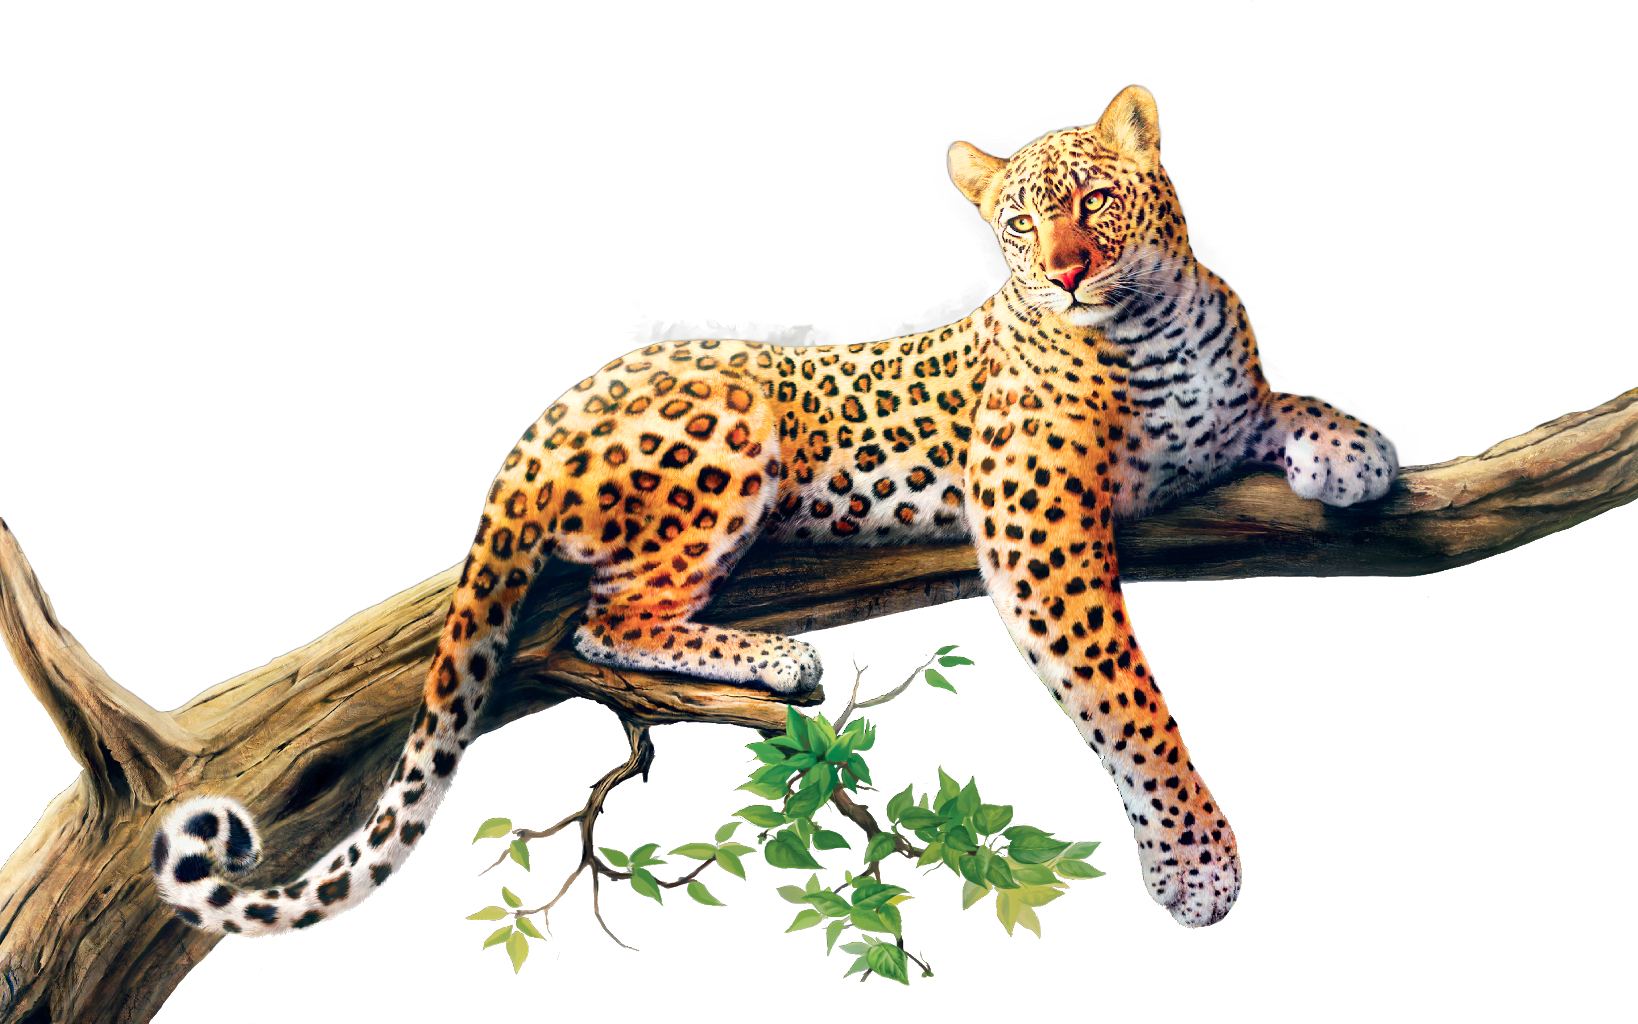 leopard clipart african leopard